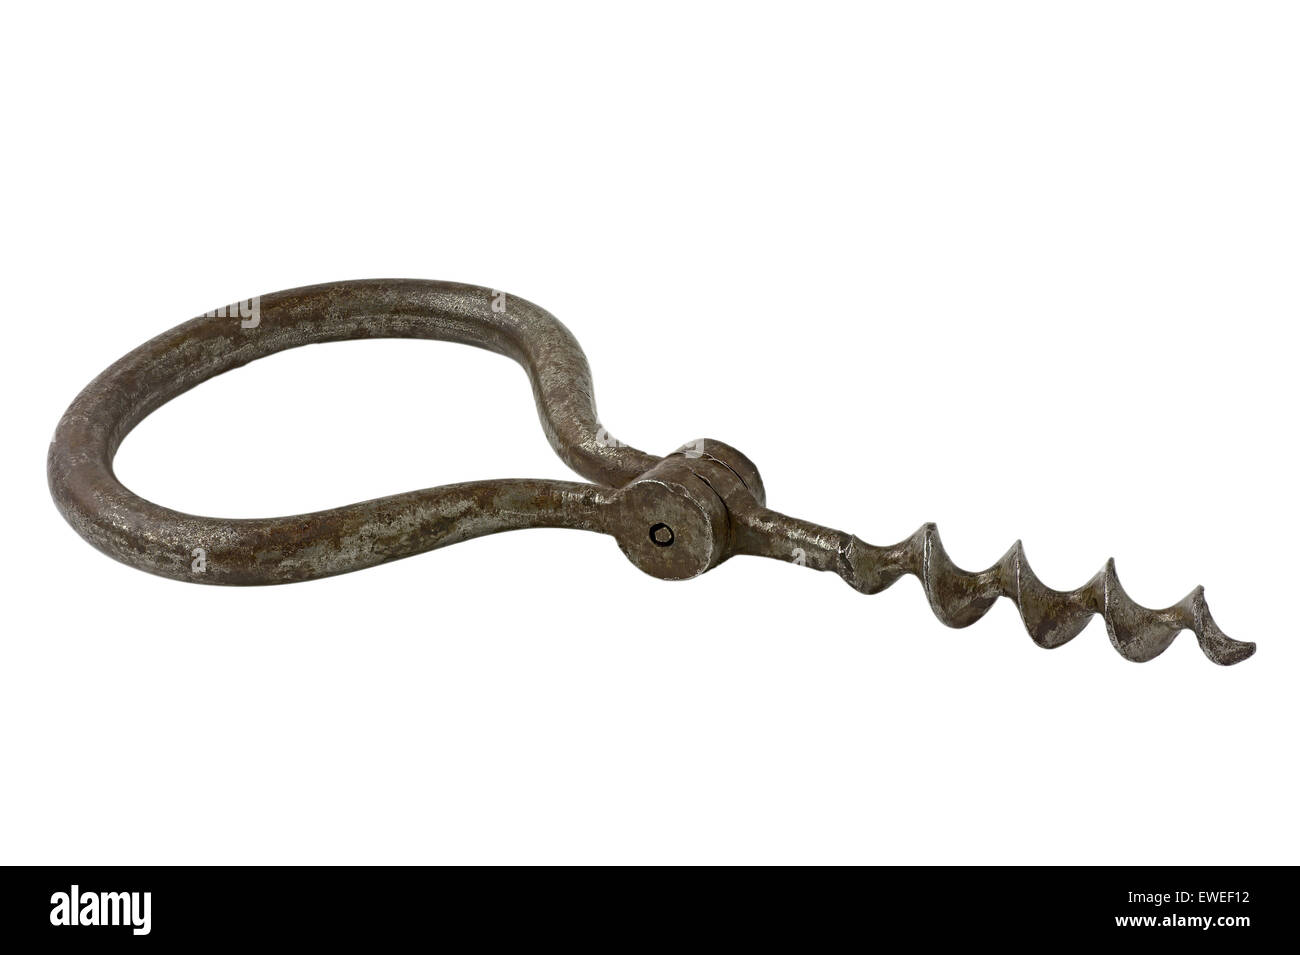 Vintage metal rusty corkscrew handmade. Isolated on white background. Stock Photo